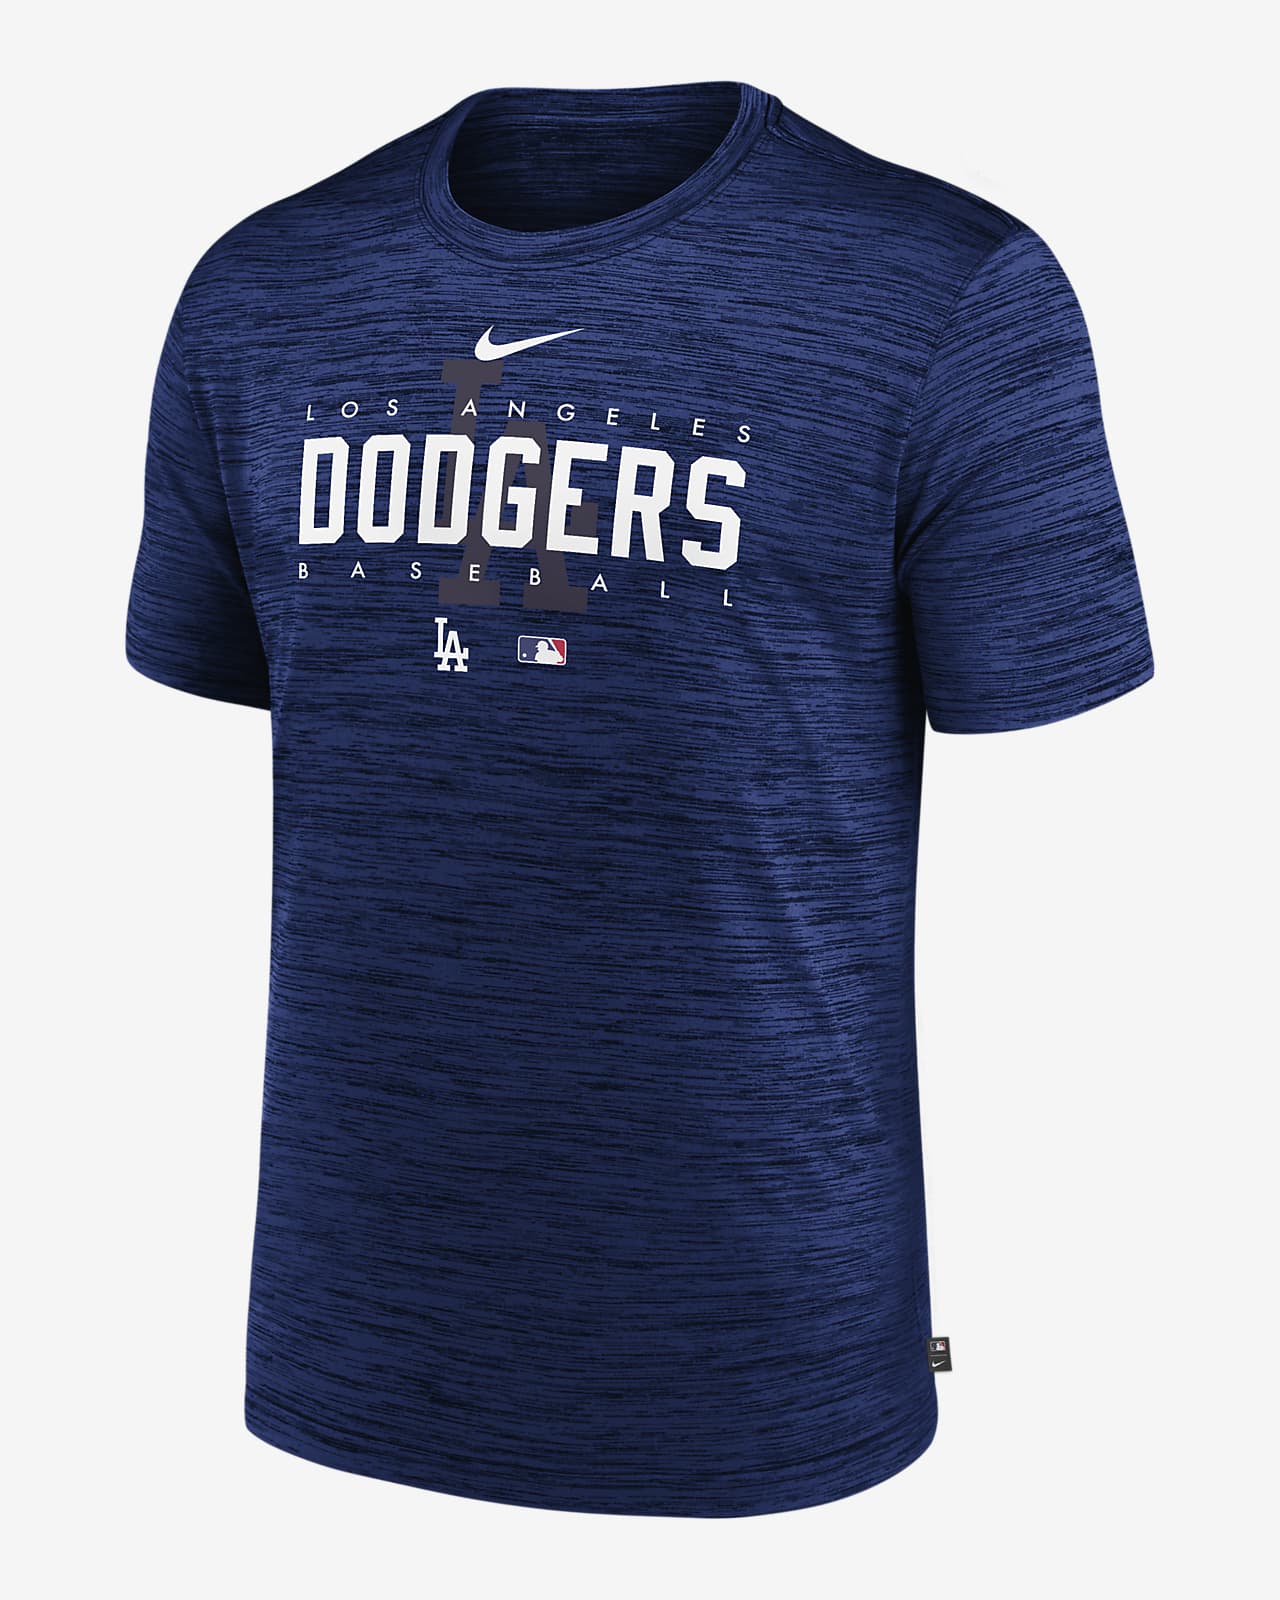 Nike Dri-FIT Velocity Practice (MLB Los Angeles Dodgers) Men's T-Shirt. Nike .com